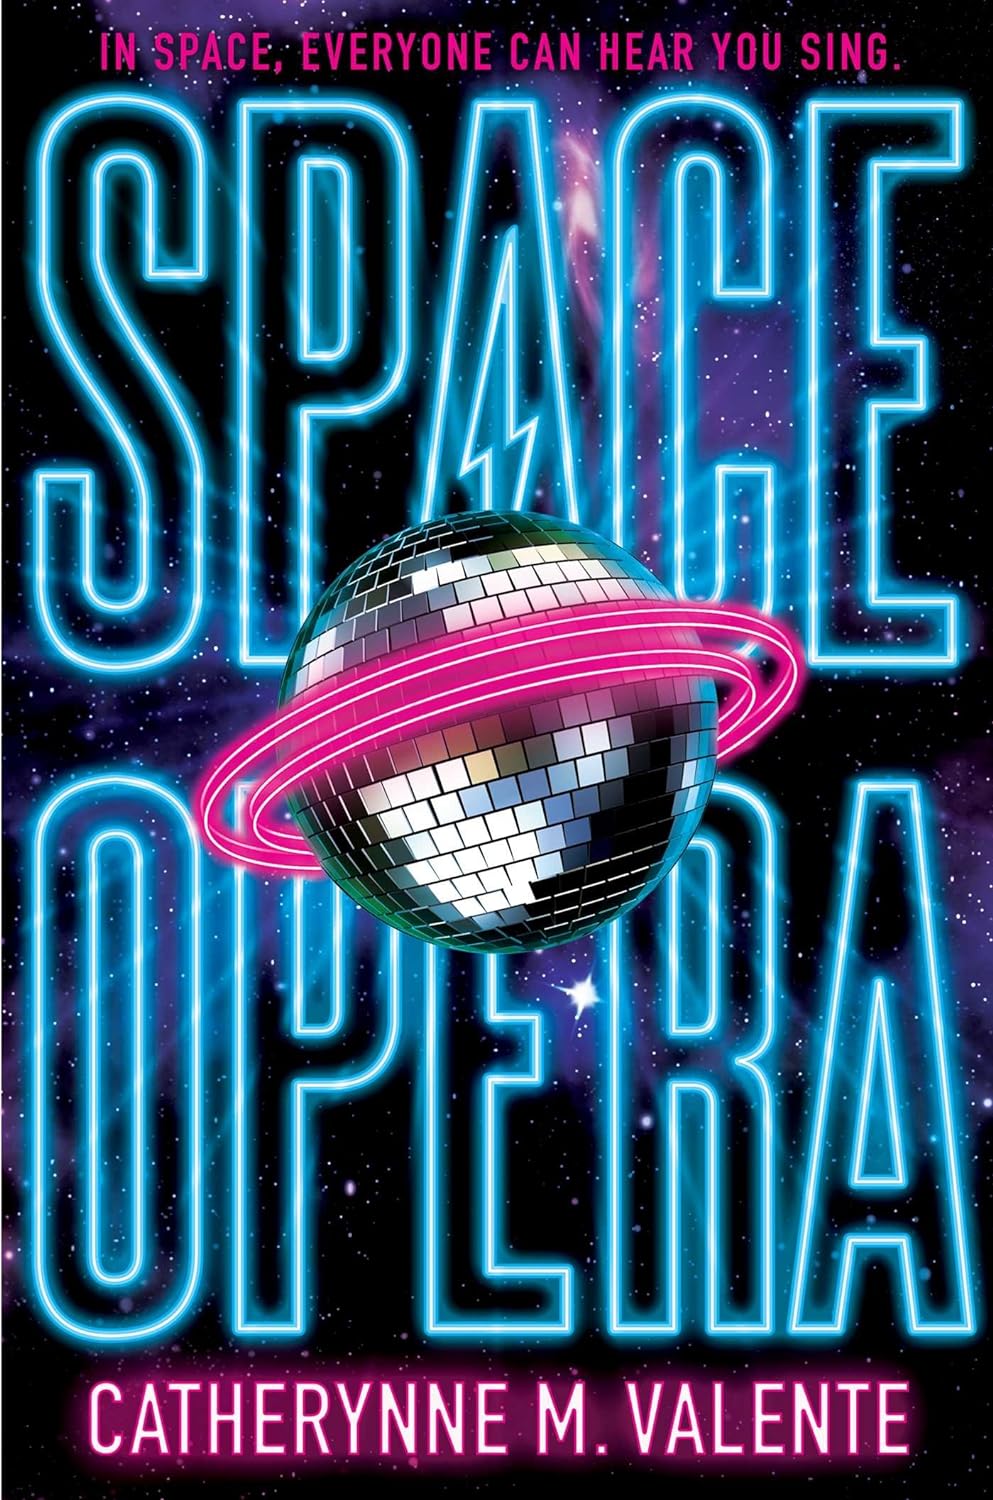 Space Opera (2018, Gallery / Saga Press)